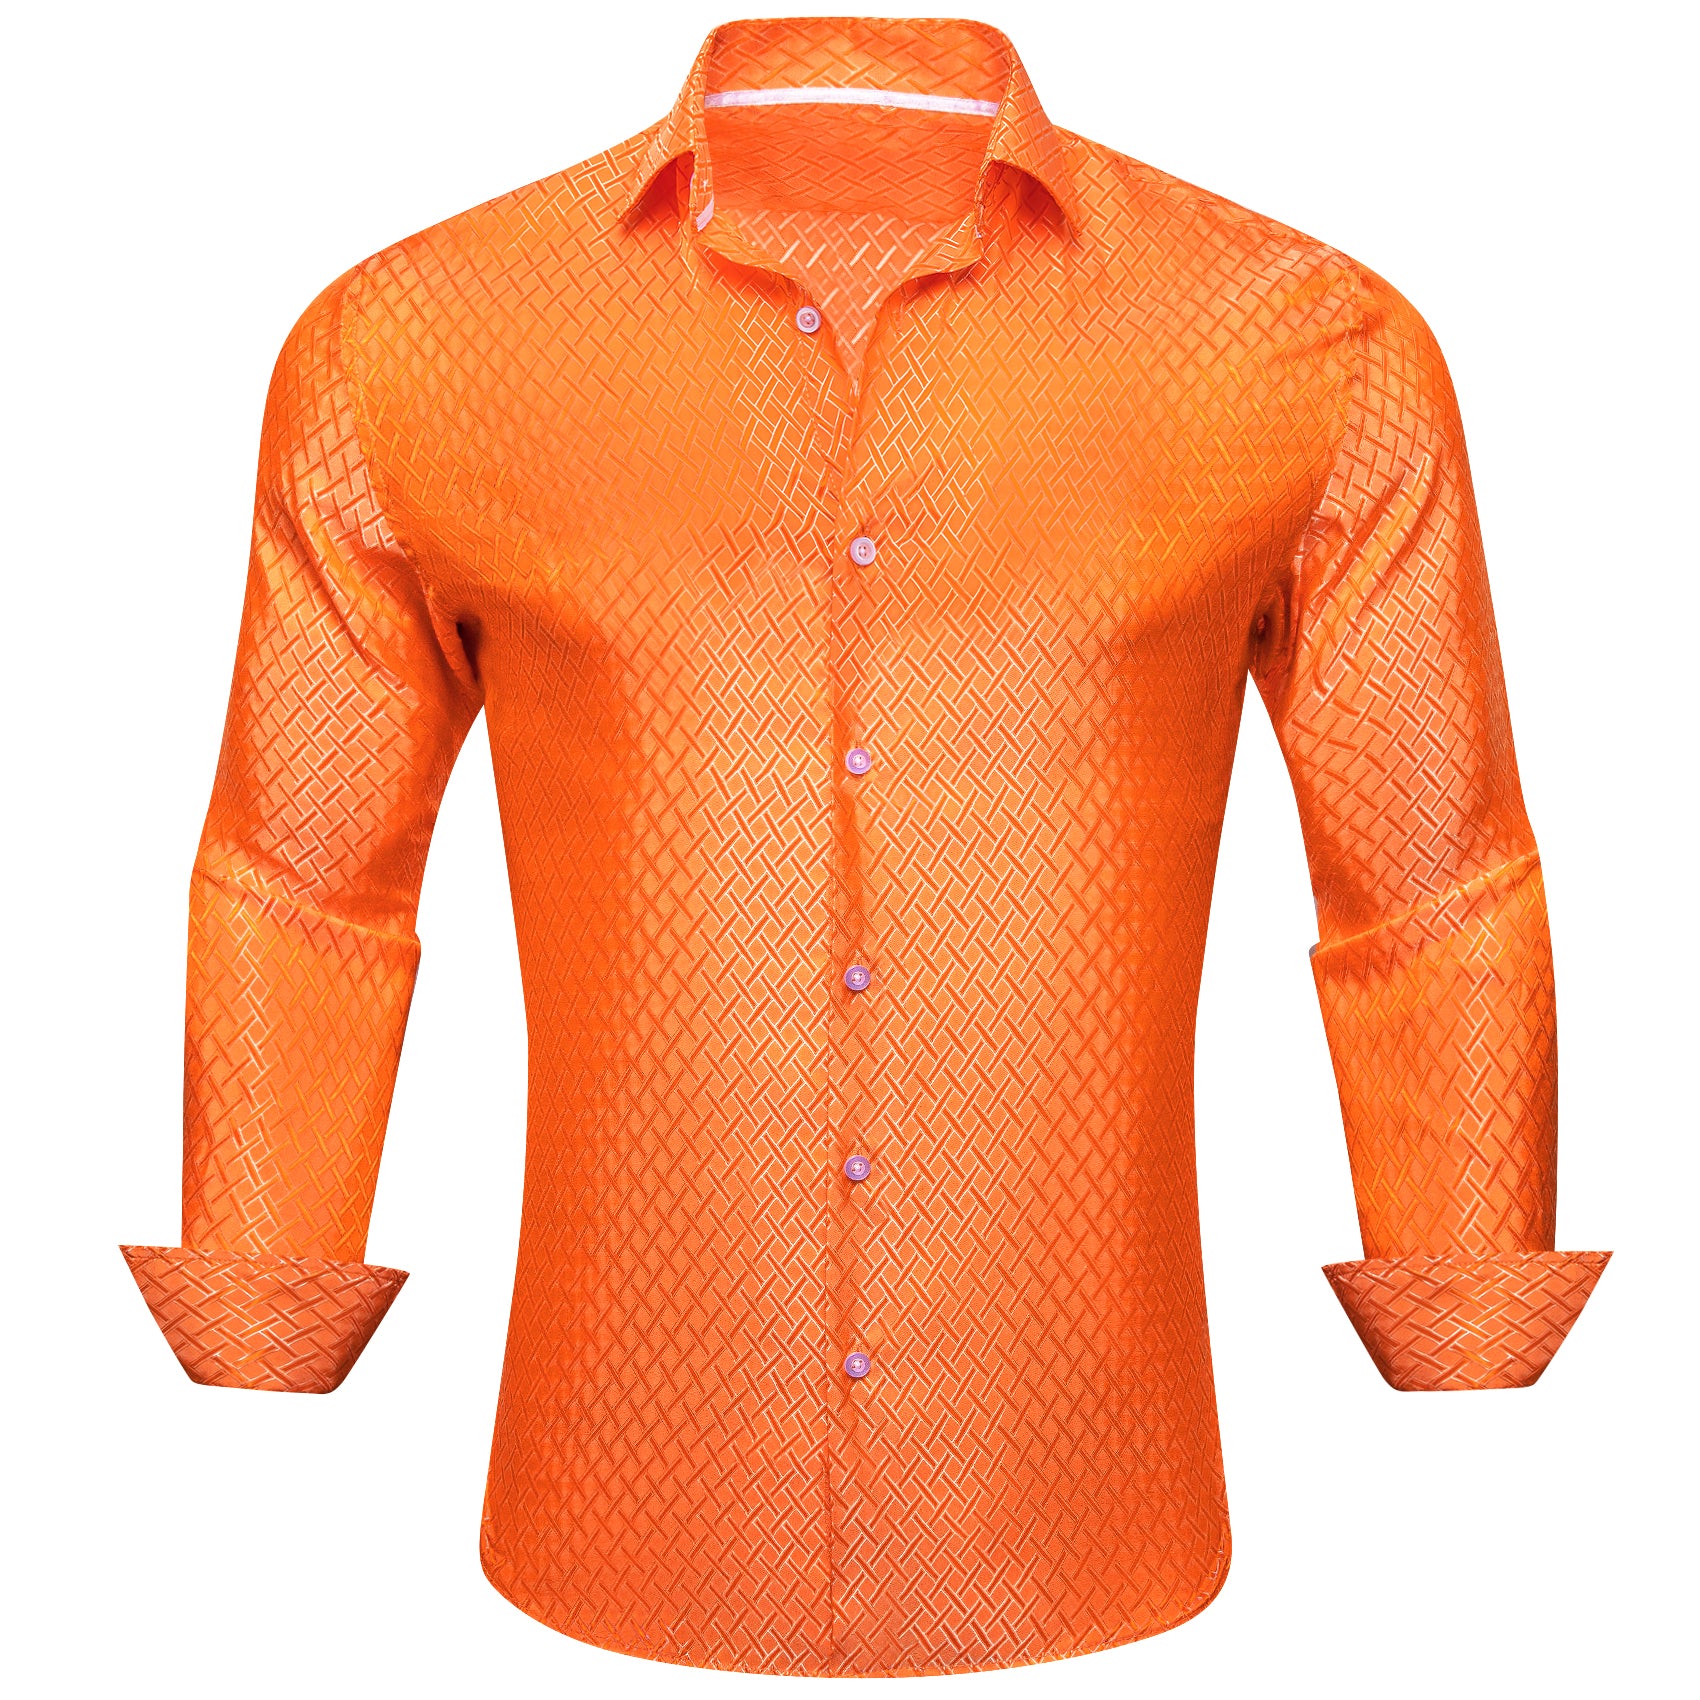 Barry.wang Button Down Shirt Orange Plaid Silk Men's Long Sleeve Shirt